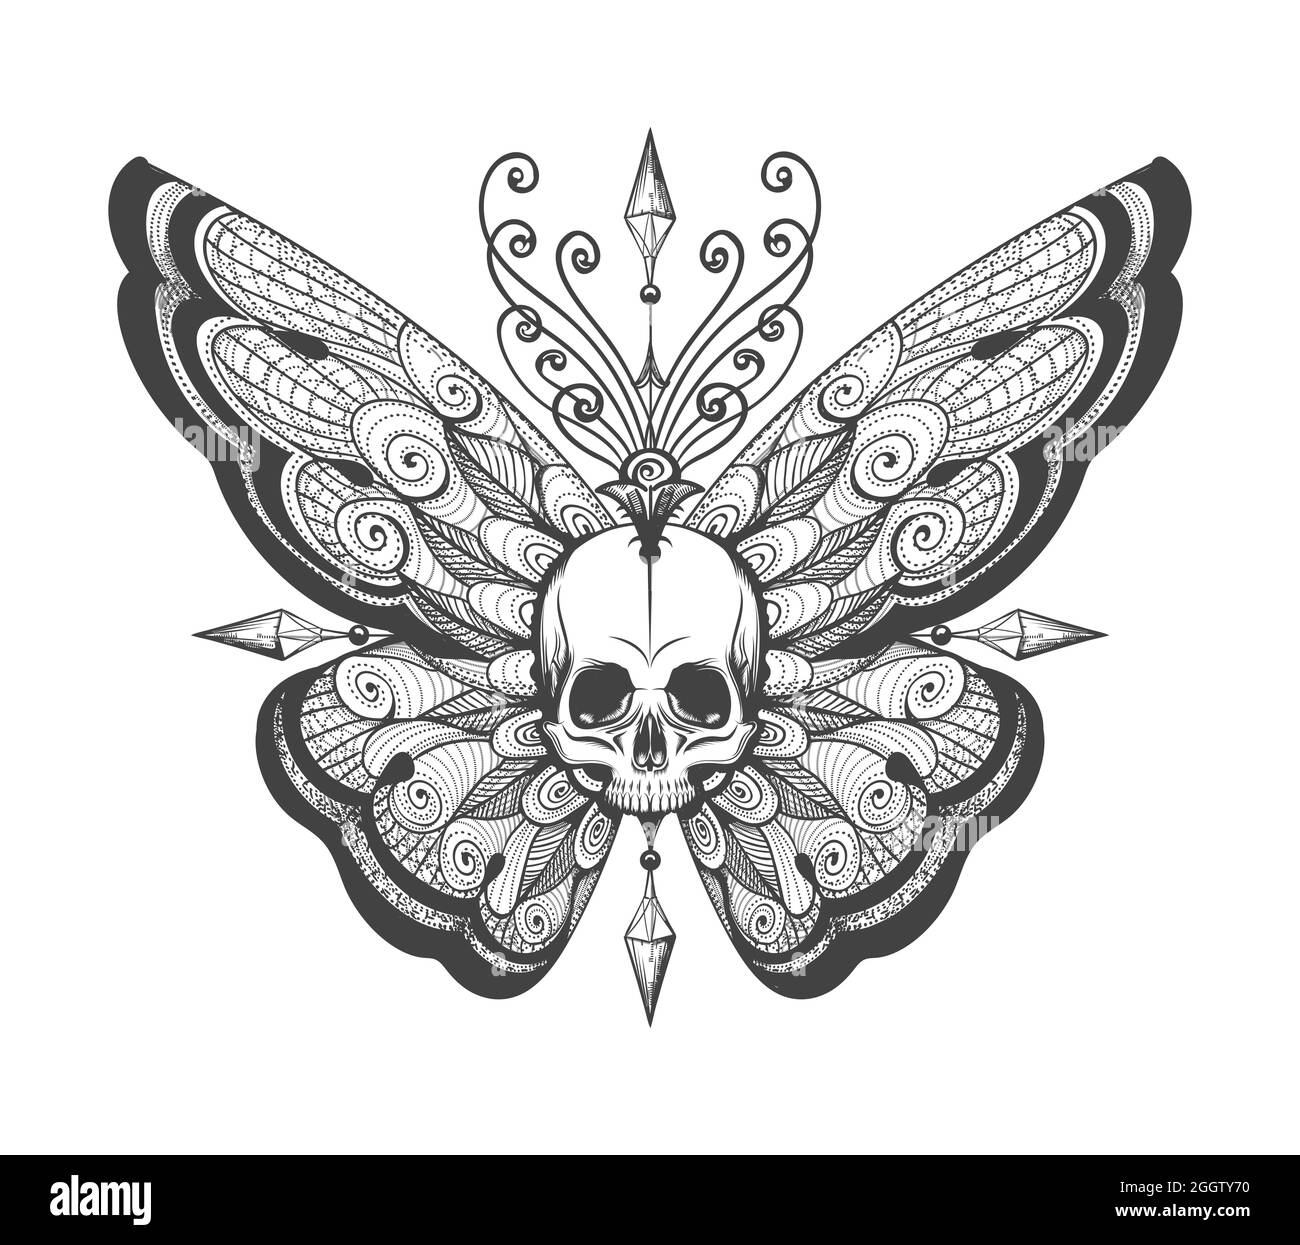 Unique Butterfly Tattoo Designs that will melt your  hearthttpswwwalienstattoocompostthebestbutterflytattoo designsin20227butterflytattoodesignsthatwillmeltyourheart